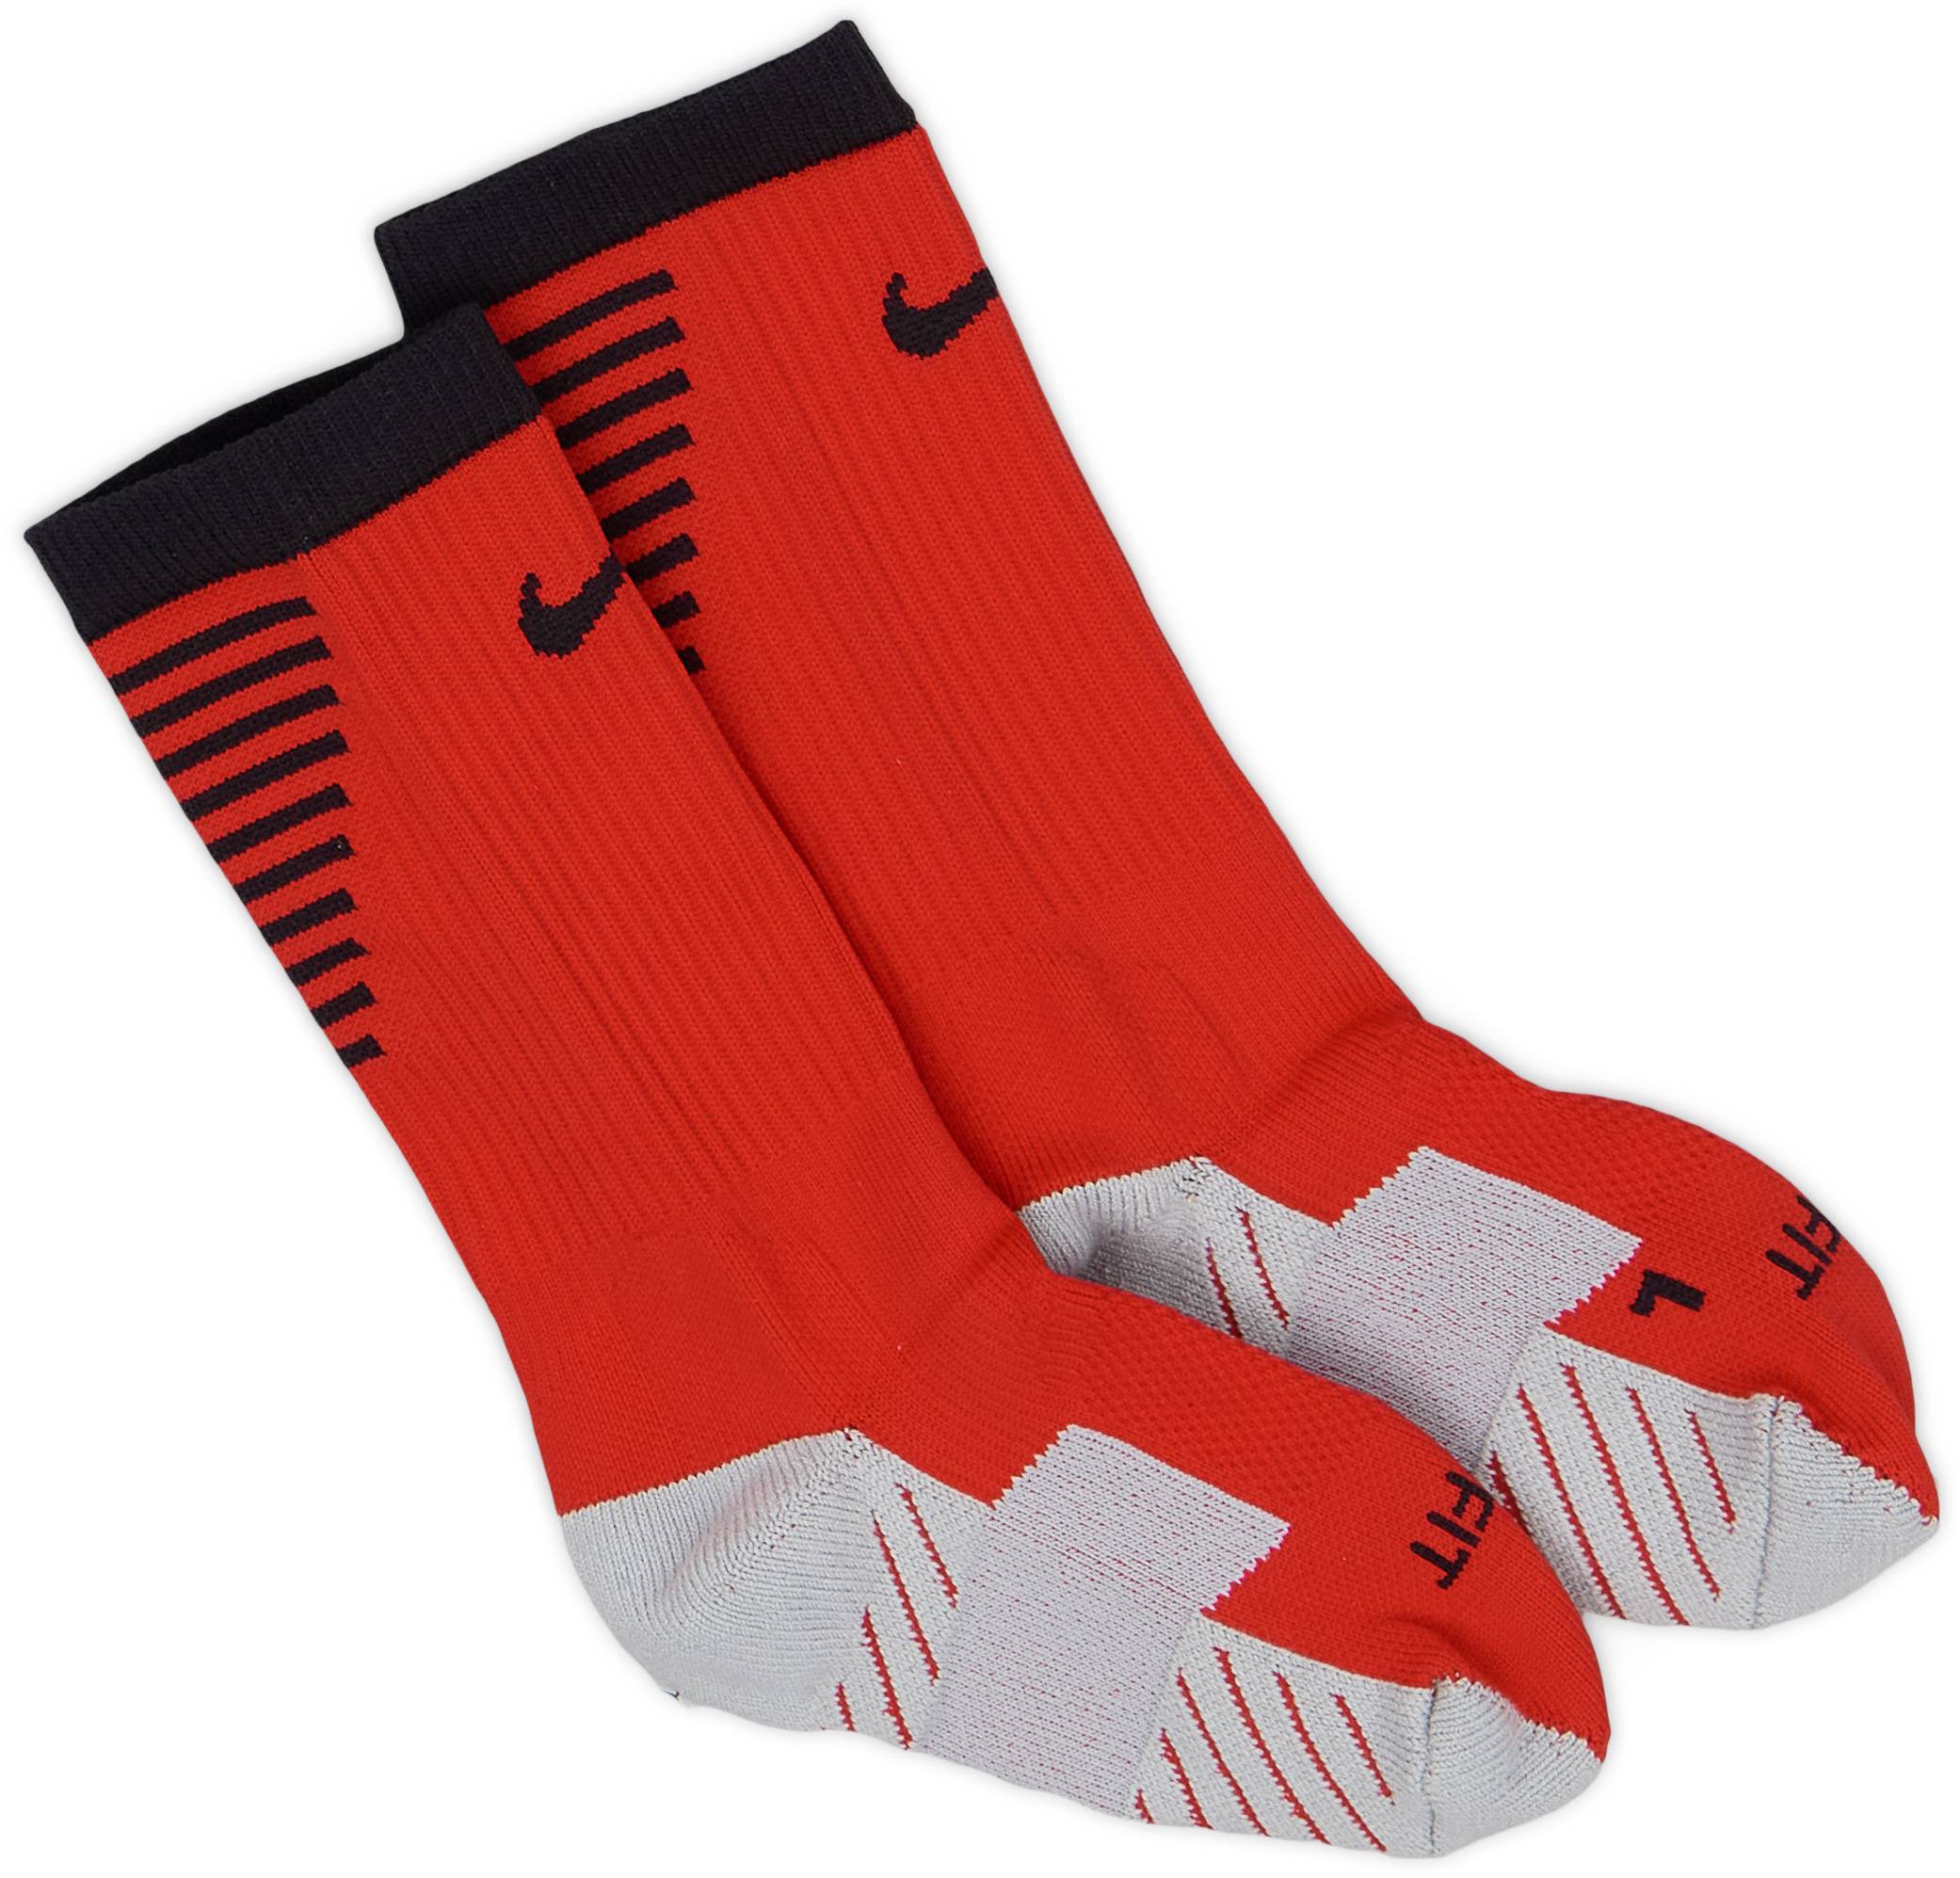 2017-18 Nike Squad Crew Socks (UK 2-5)